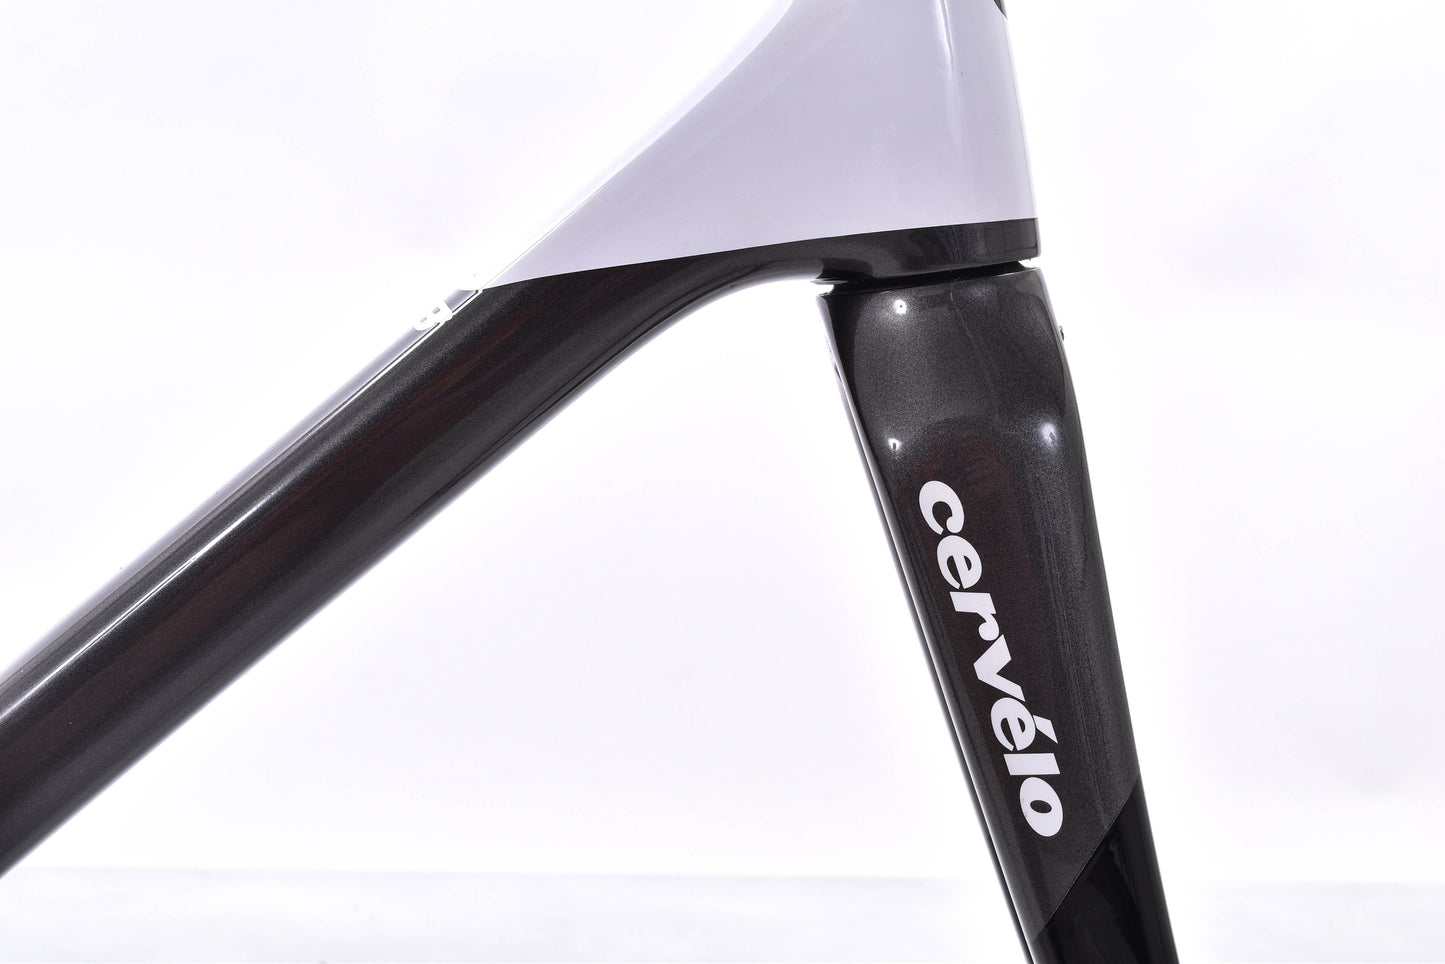 USED 2018 Cervelo C3 Disc 51cm Carbon Road Frame Black/White/Grey